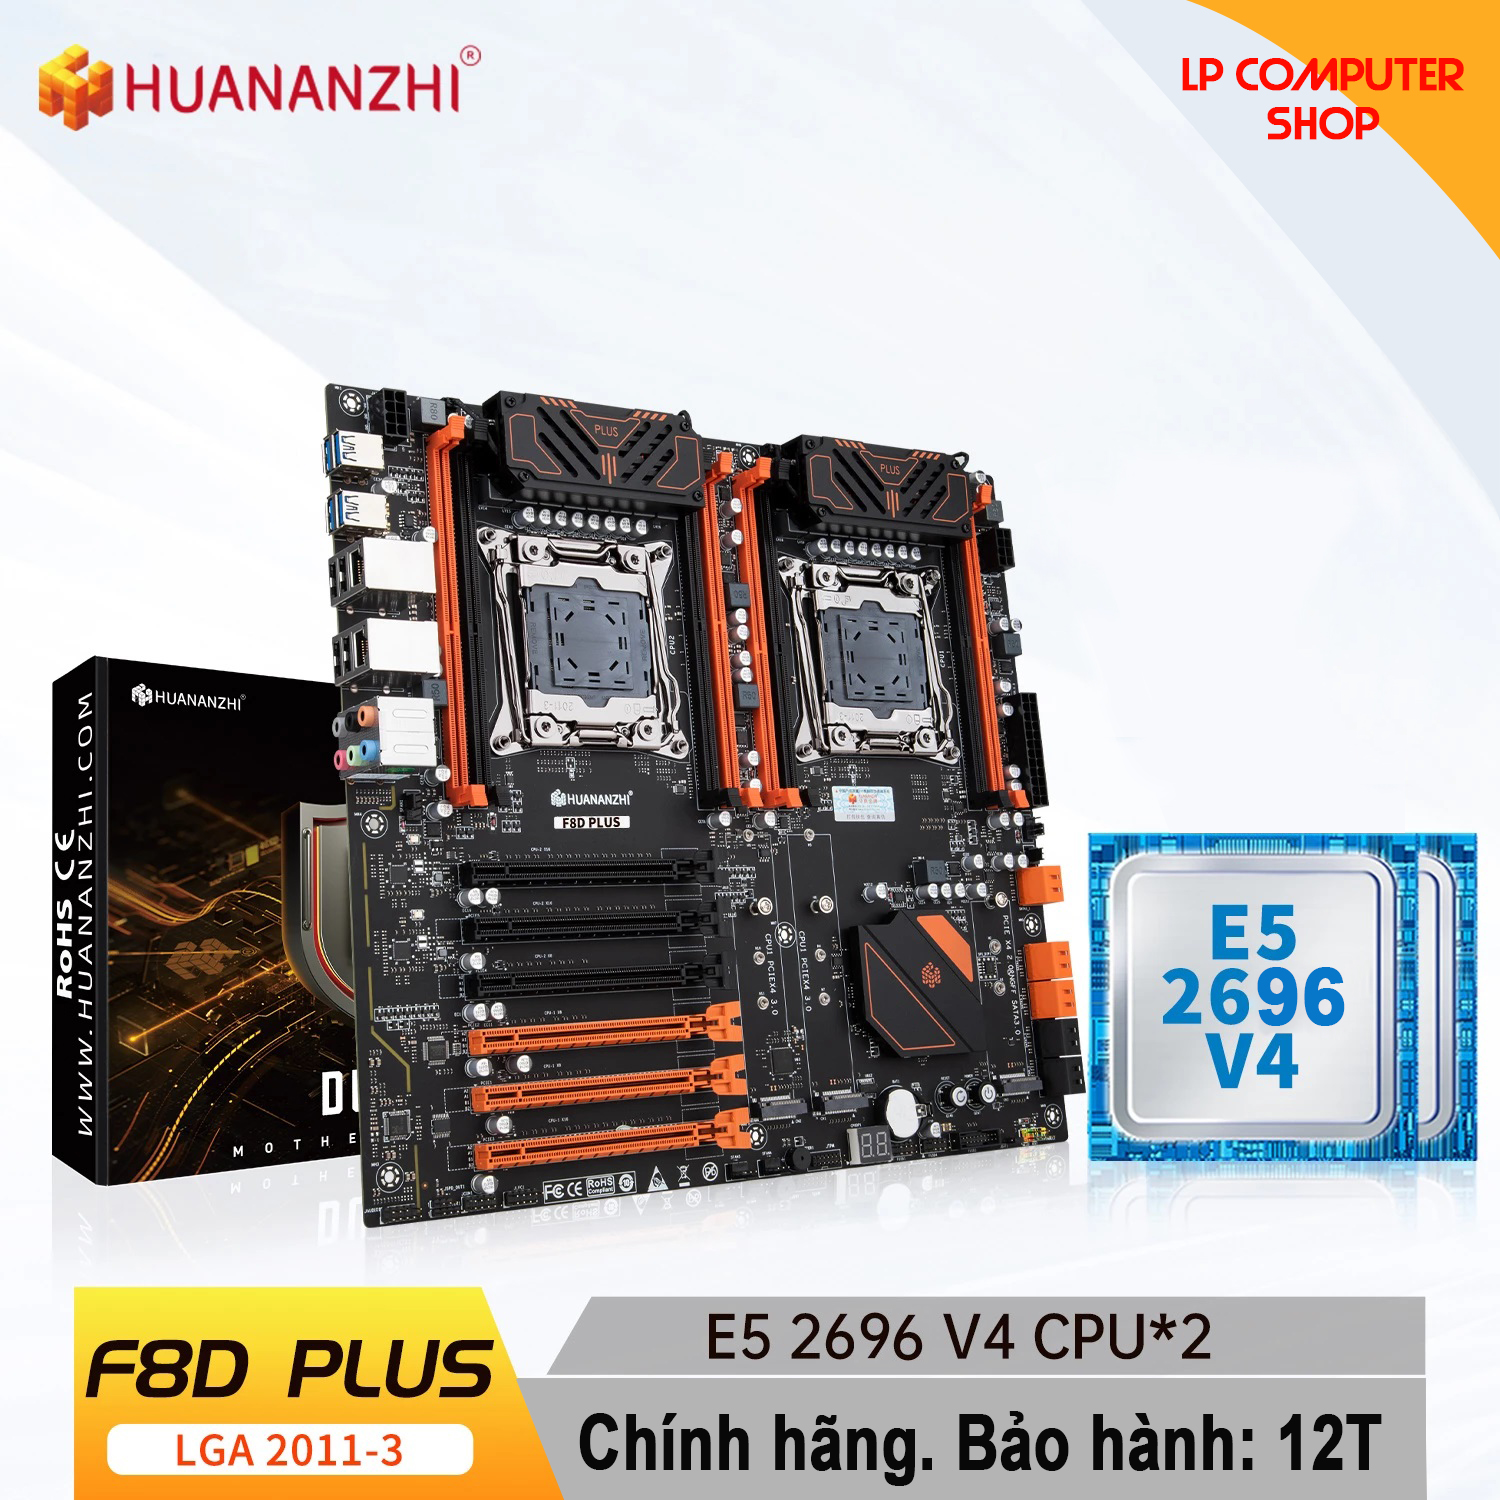 Combo main HUANANZHI X99 F8D PLUS + Dual Xeon 2696 V3 V4 + Ram DDR4 REG